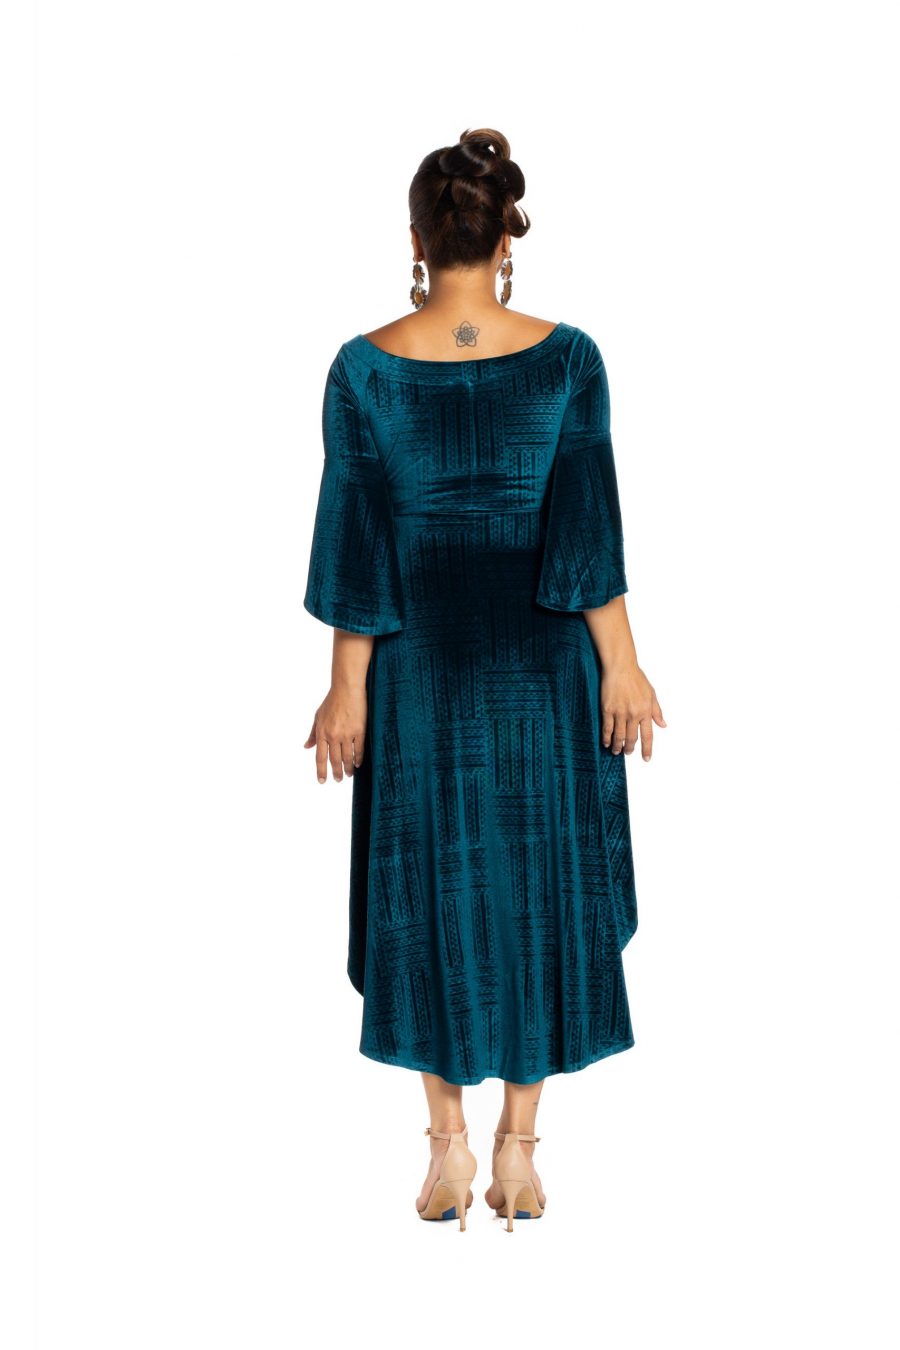 Model wearing Melia Dress in Peacock Teal Ulana Pattern- Back View